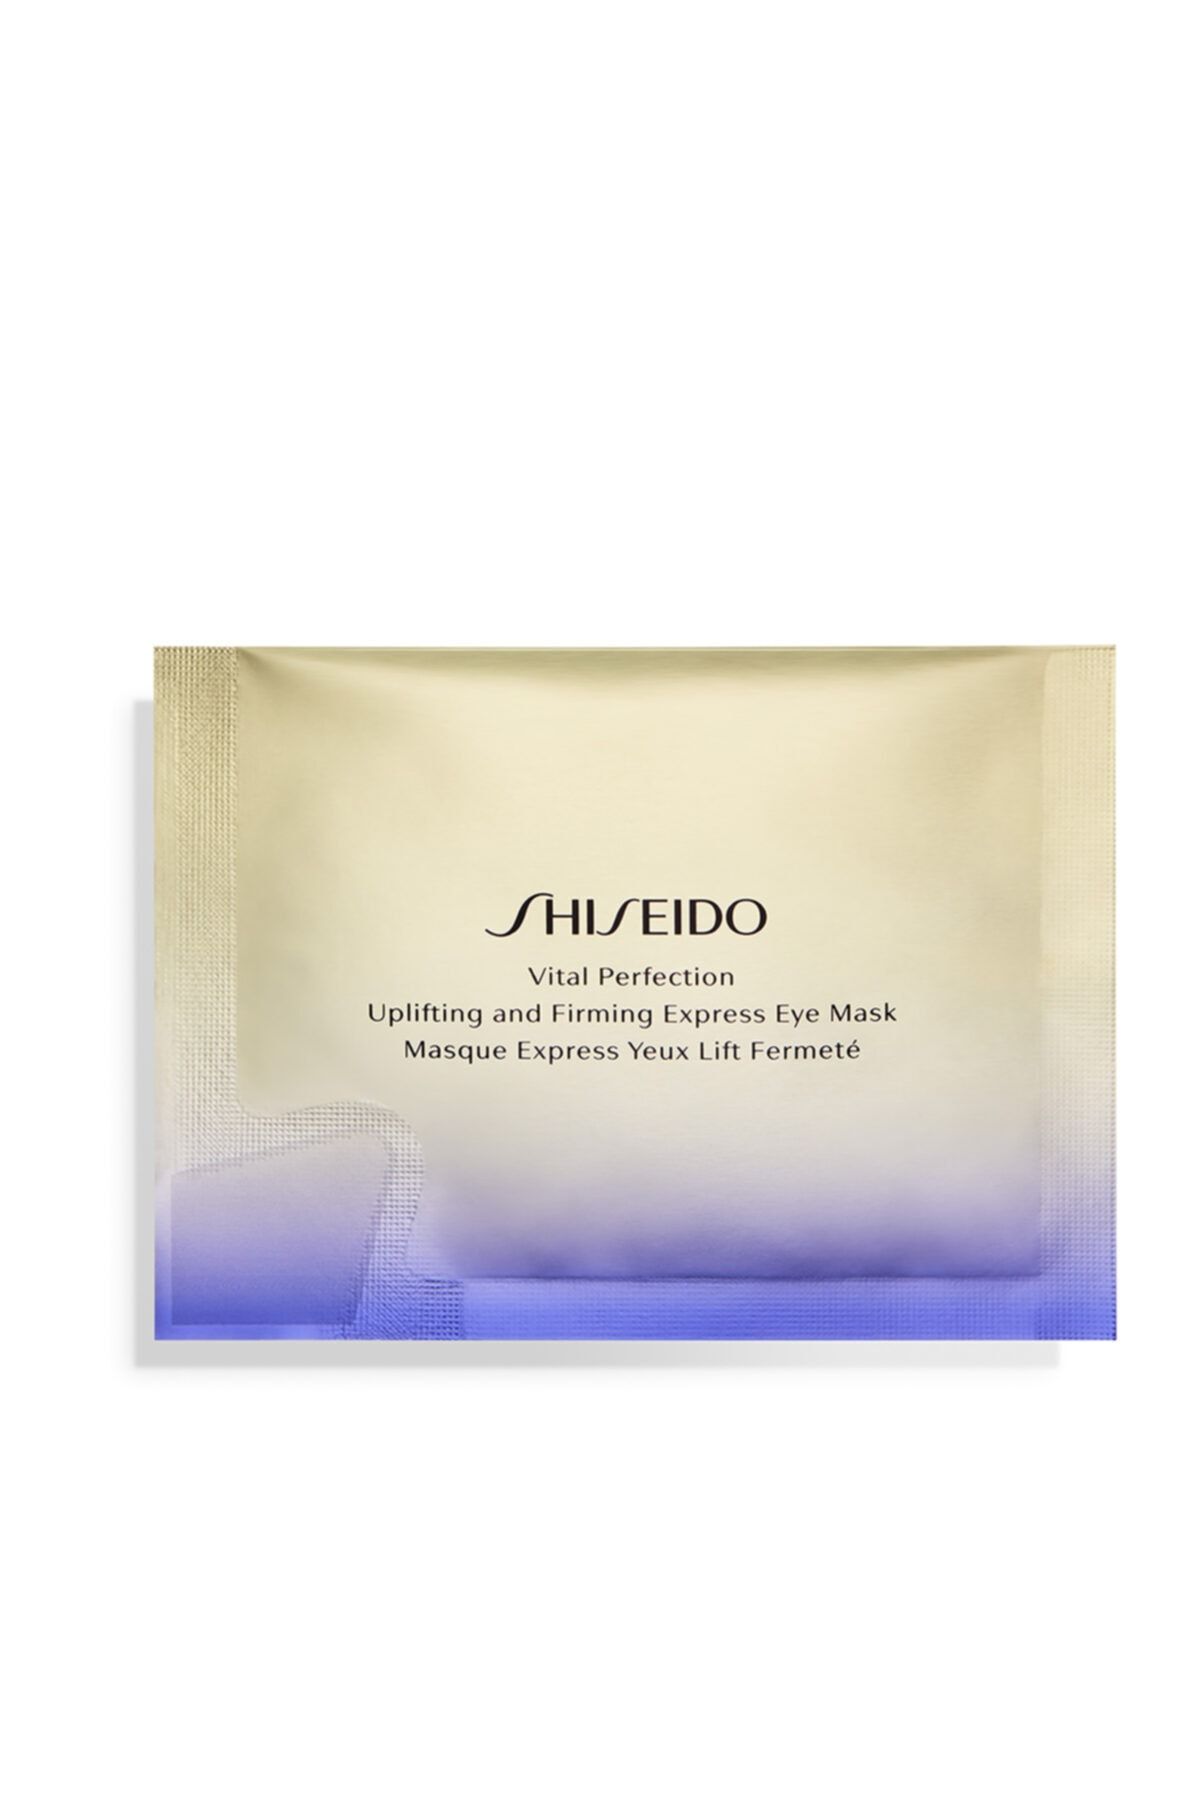 Shiseido Vital Perfection Uplifting &firming Express Eye Mask